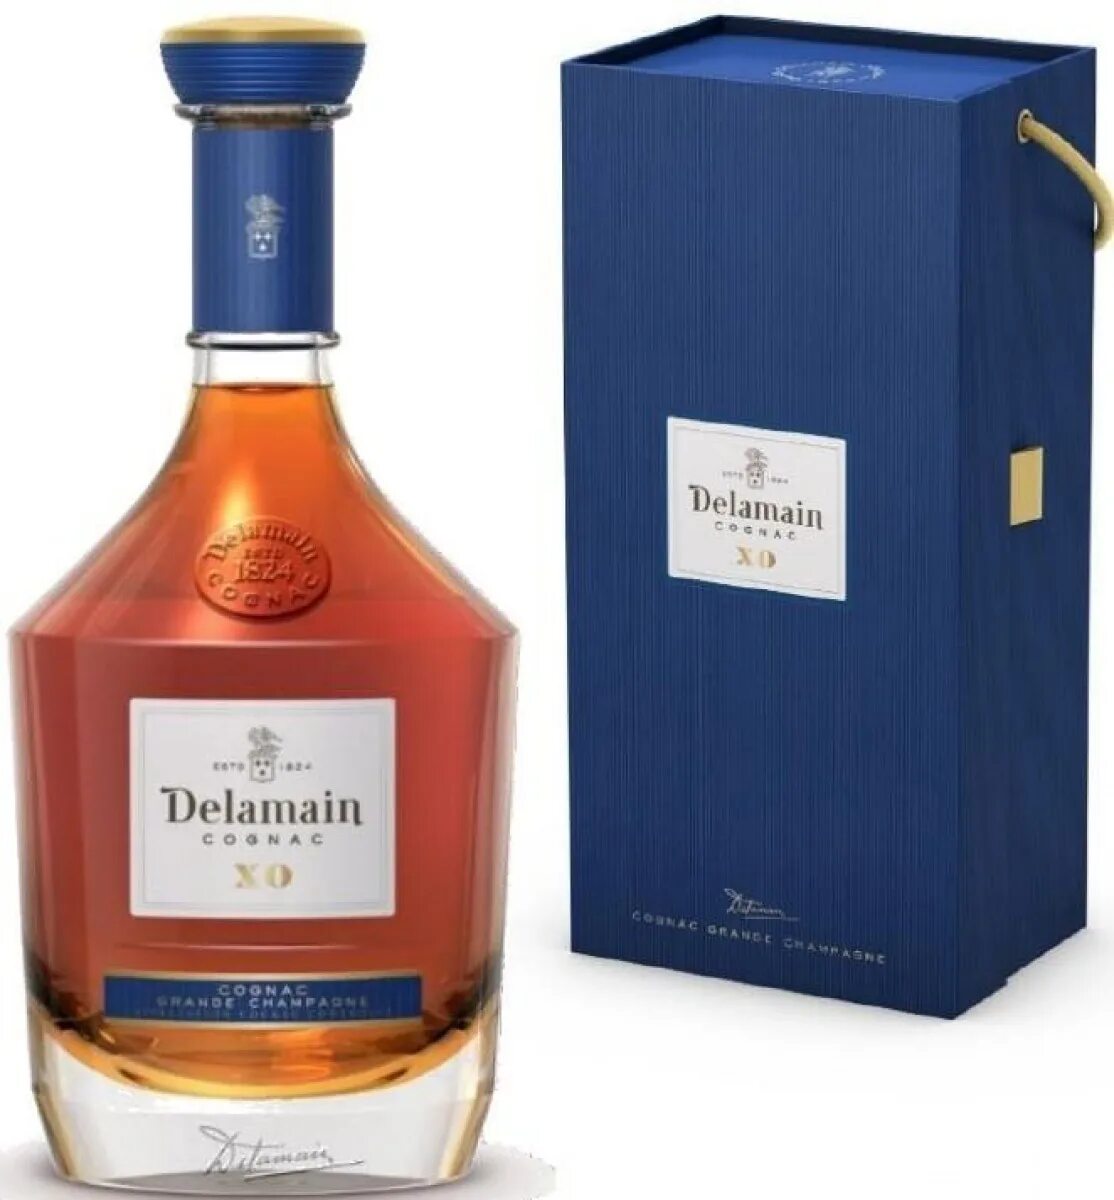 Delamain Cognac XO. Французский коньяк Delamain. Делямэн Хо Гранд шампань коньяк. Delamain Cognac 1967.